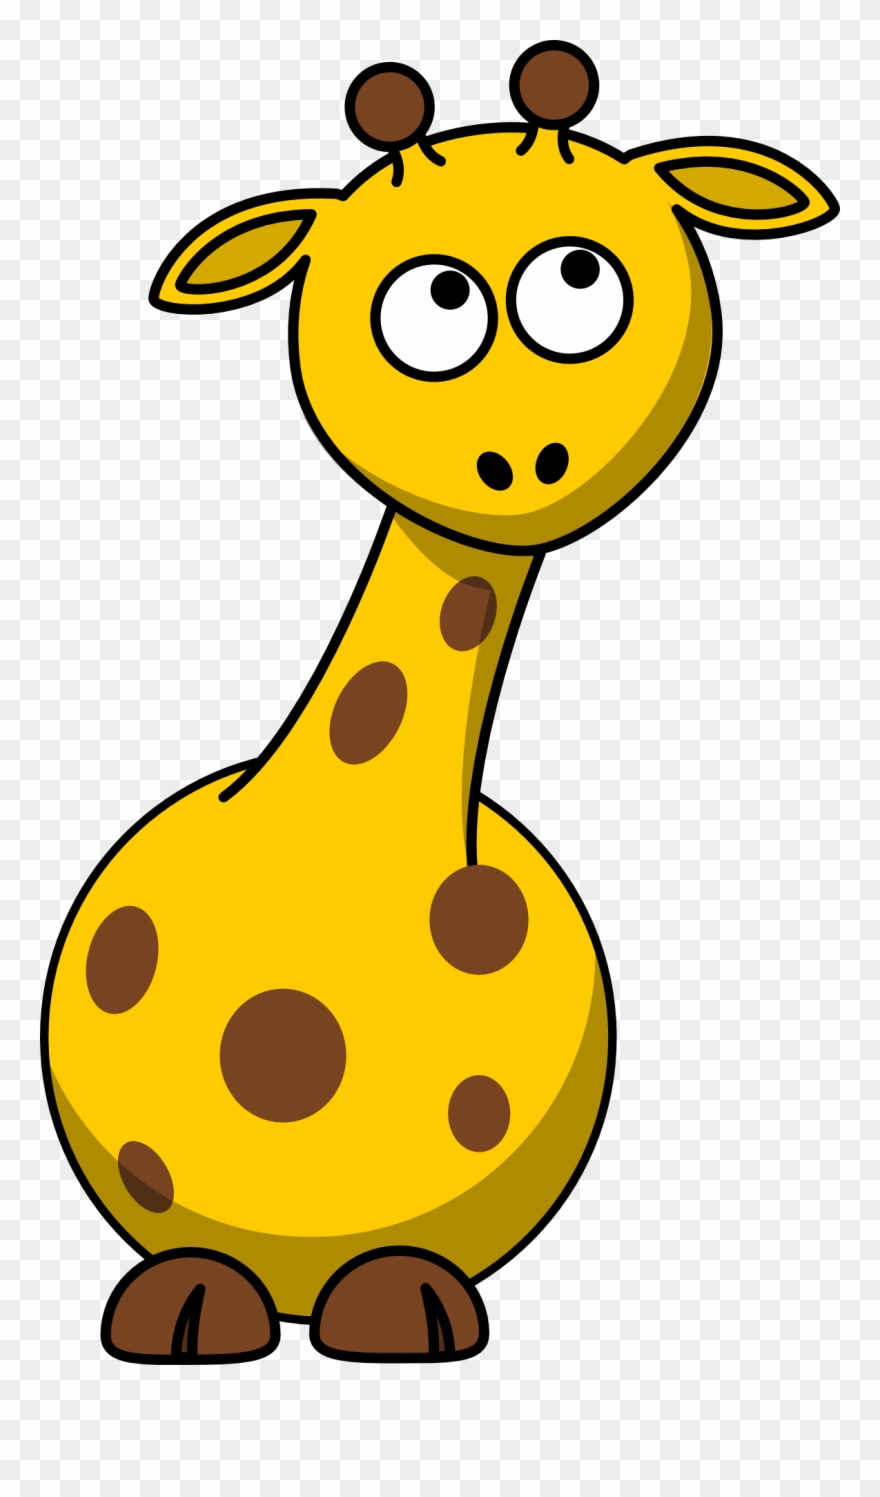 Cartoon Giraffe Free Vector Graphic Baby Giraffe Cute